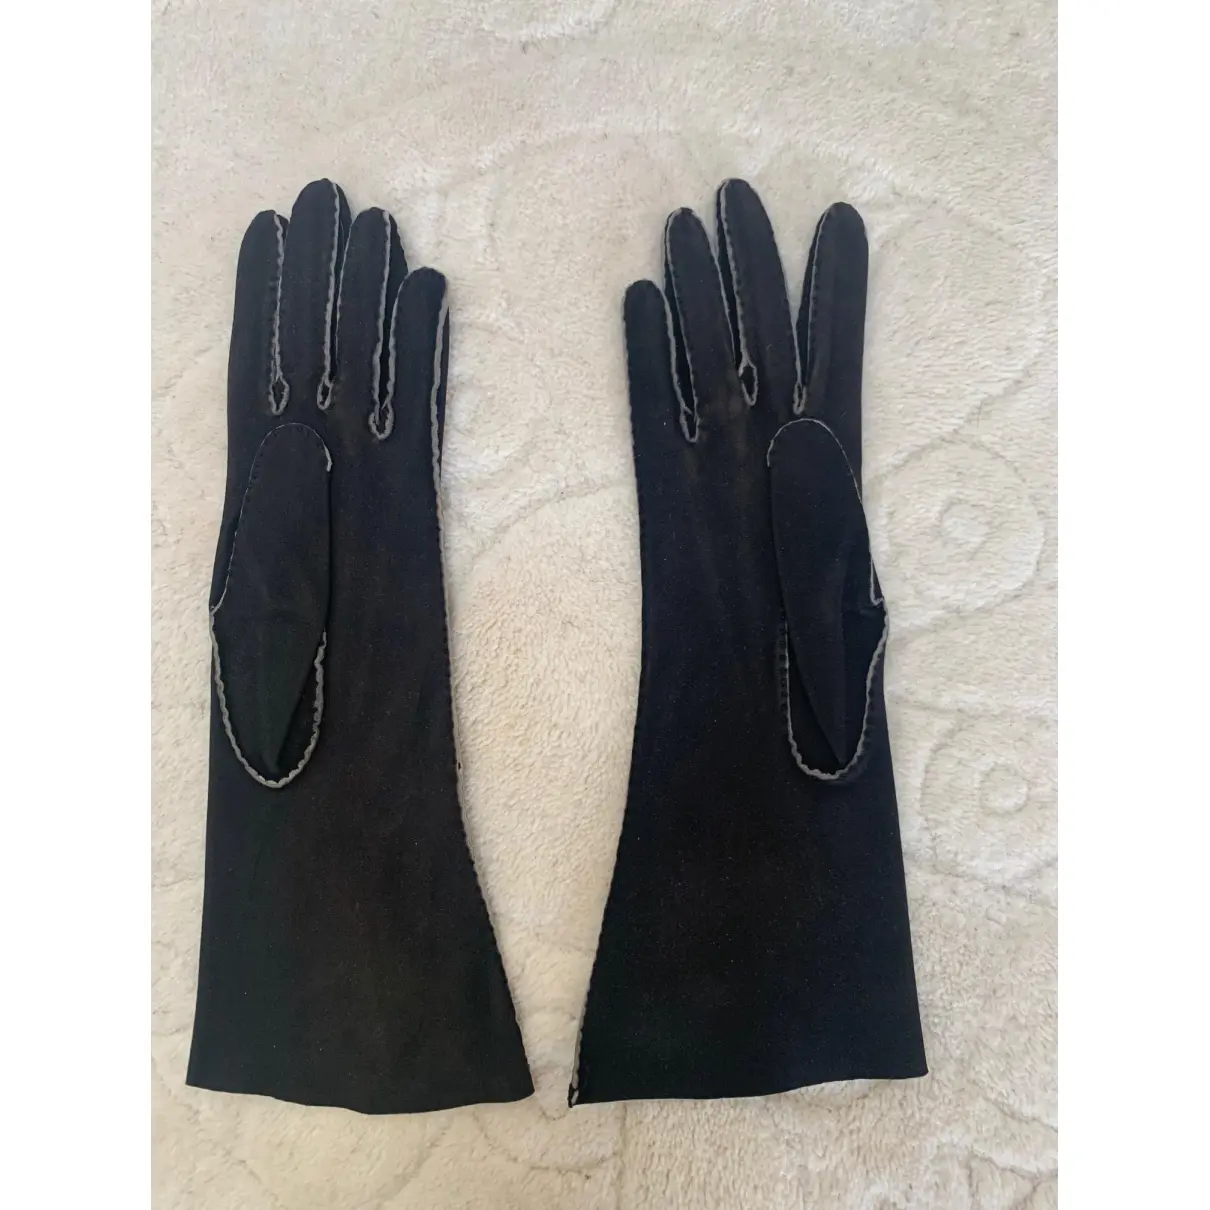 Buy Hermès Long gloves online